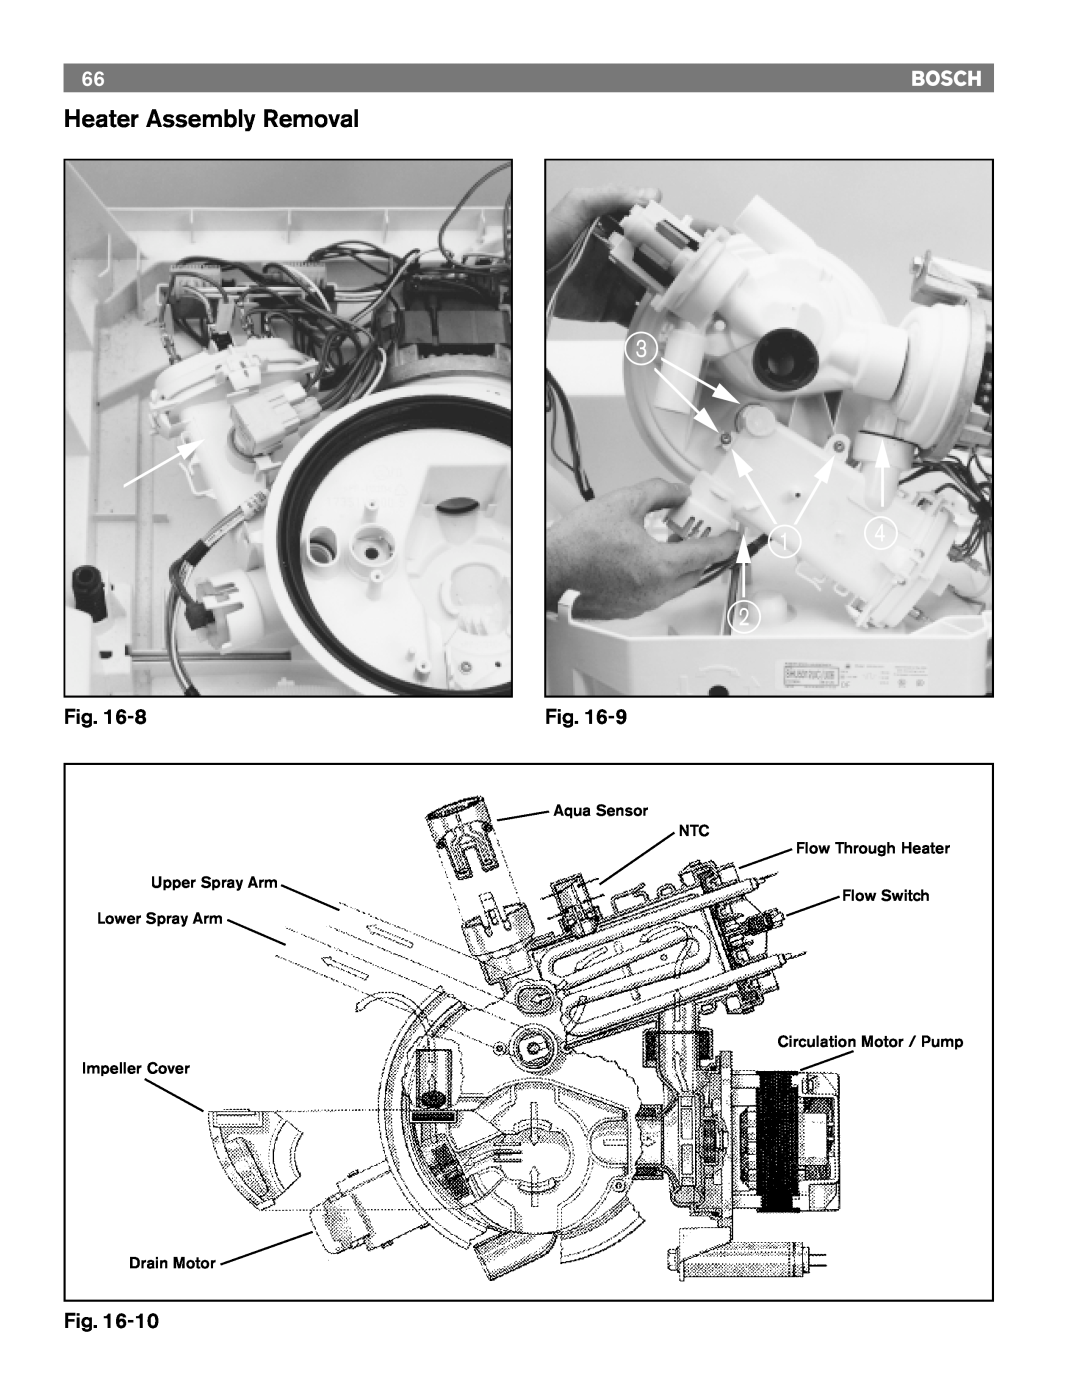 Bosch Appliances 6805, TRUE, 6806, 4306, 4302, 6802 manual 3 1, Heater Assembly Removal 